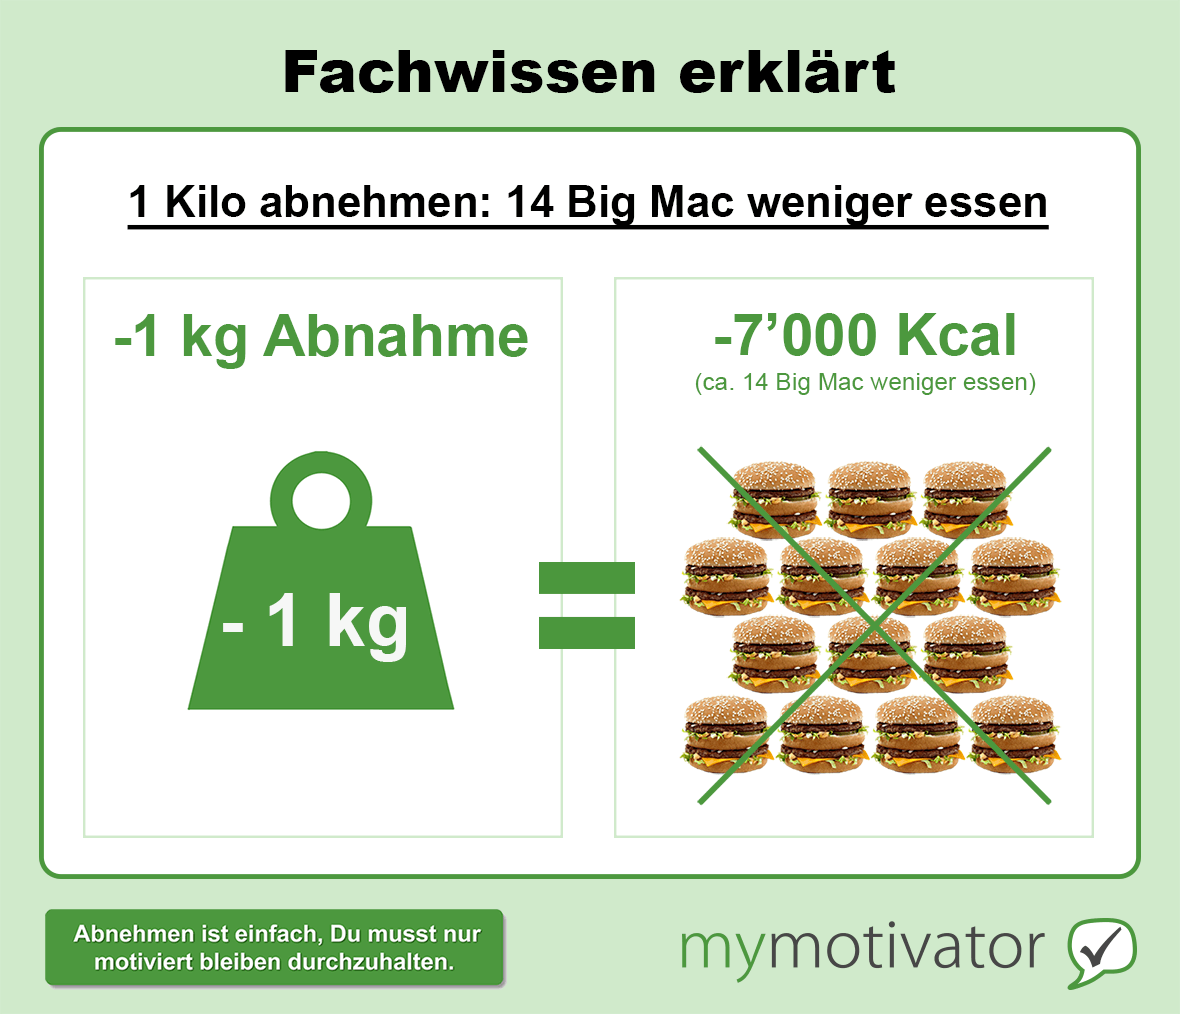 Um 1 Kilo abzunehmen muss man ca. 7'000 Kalorien einsparen - das entspricht etwa 14 Big Mac